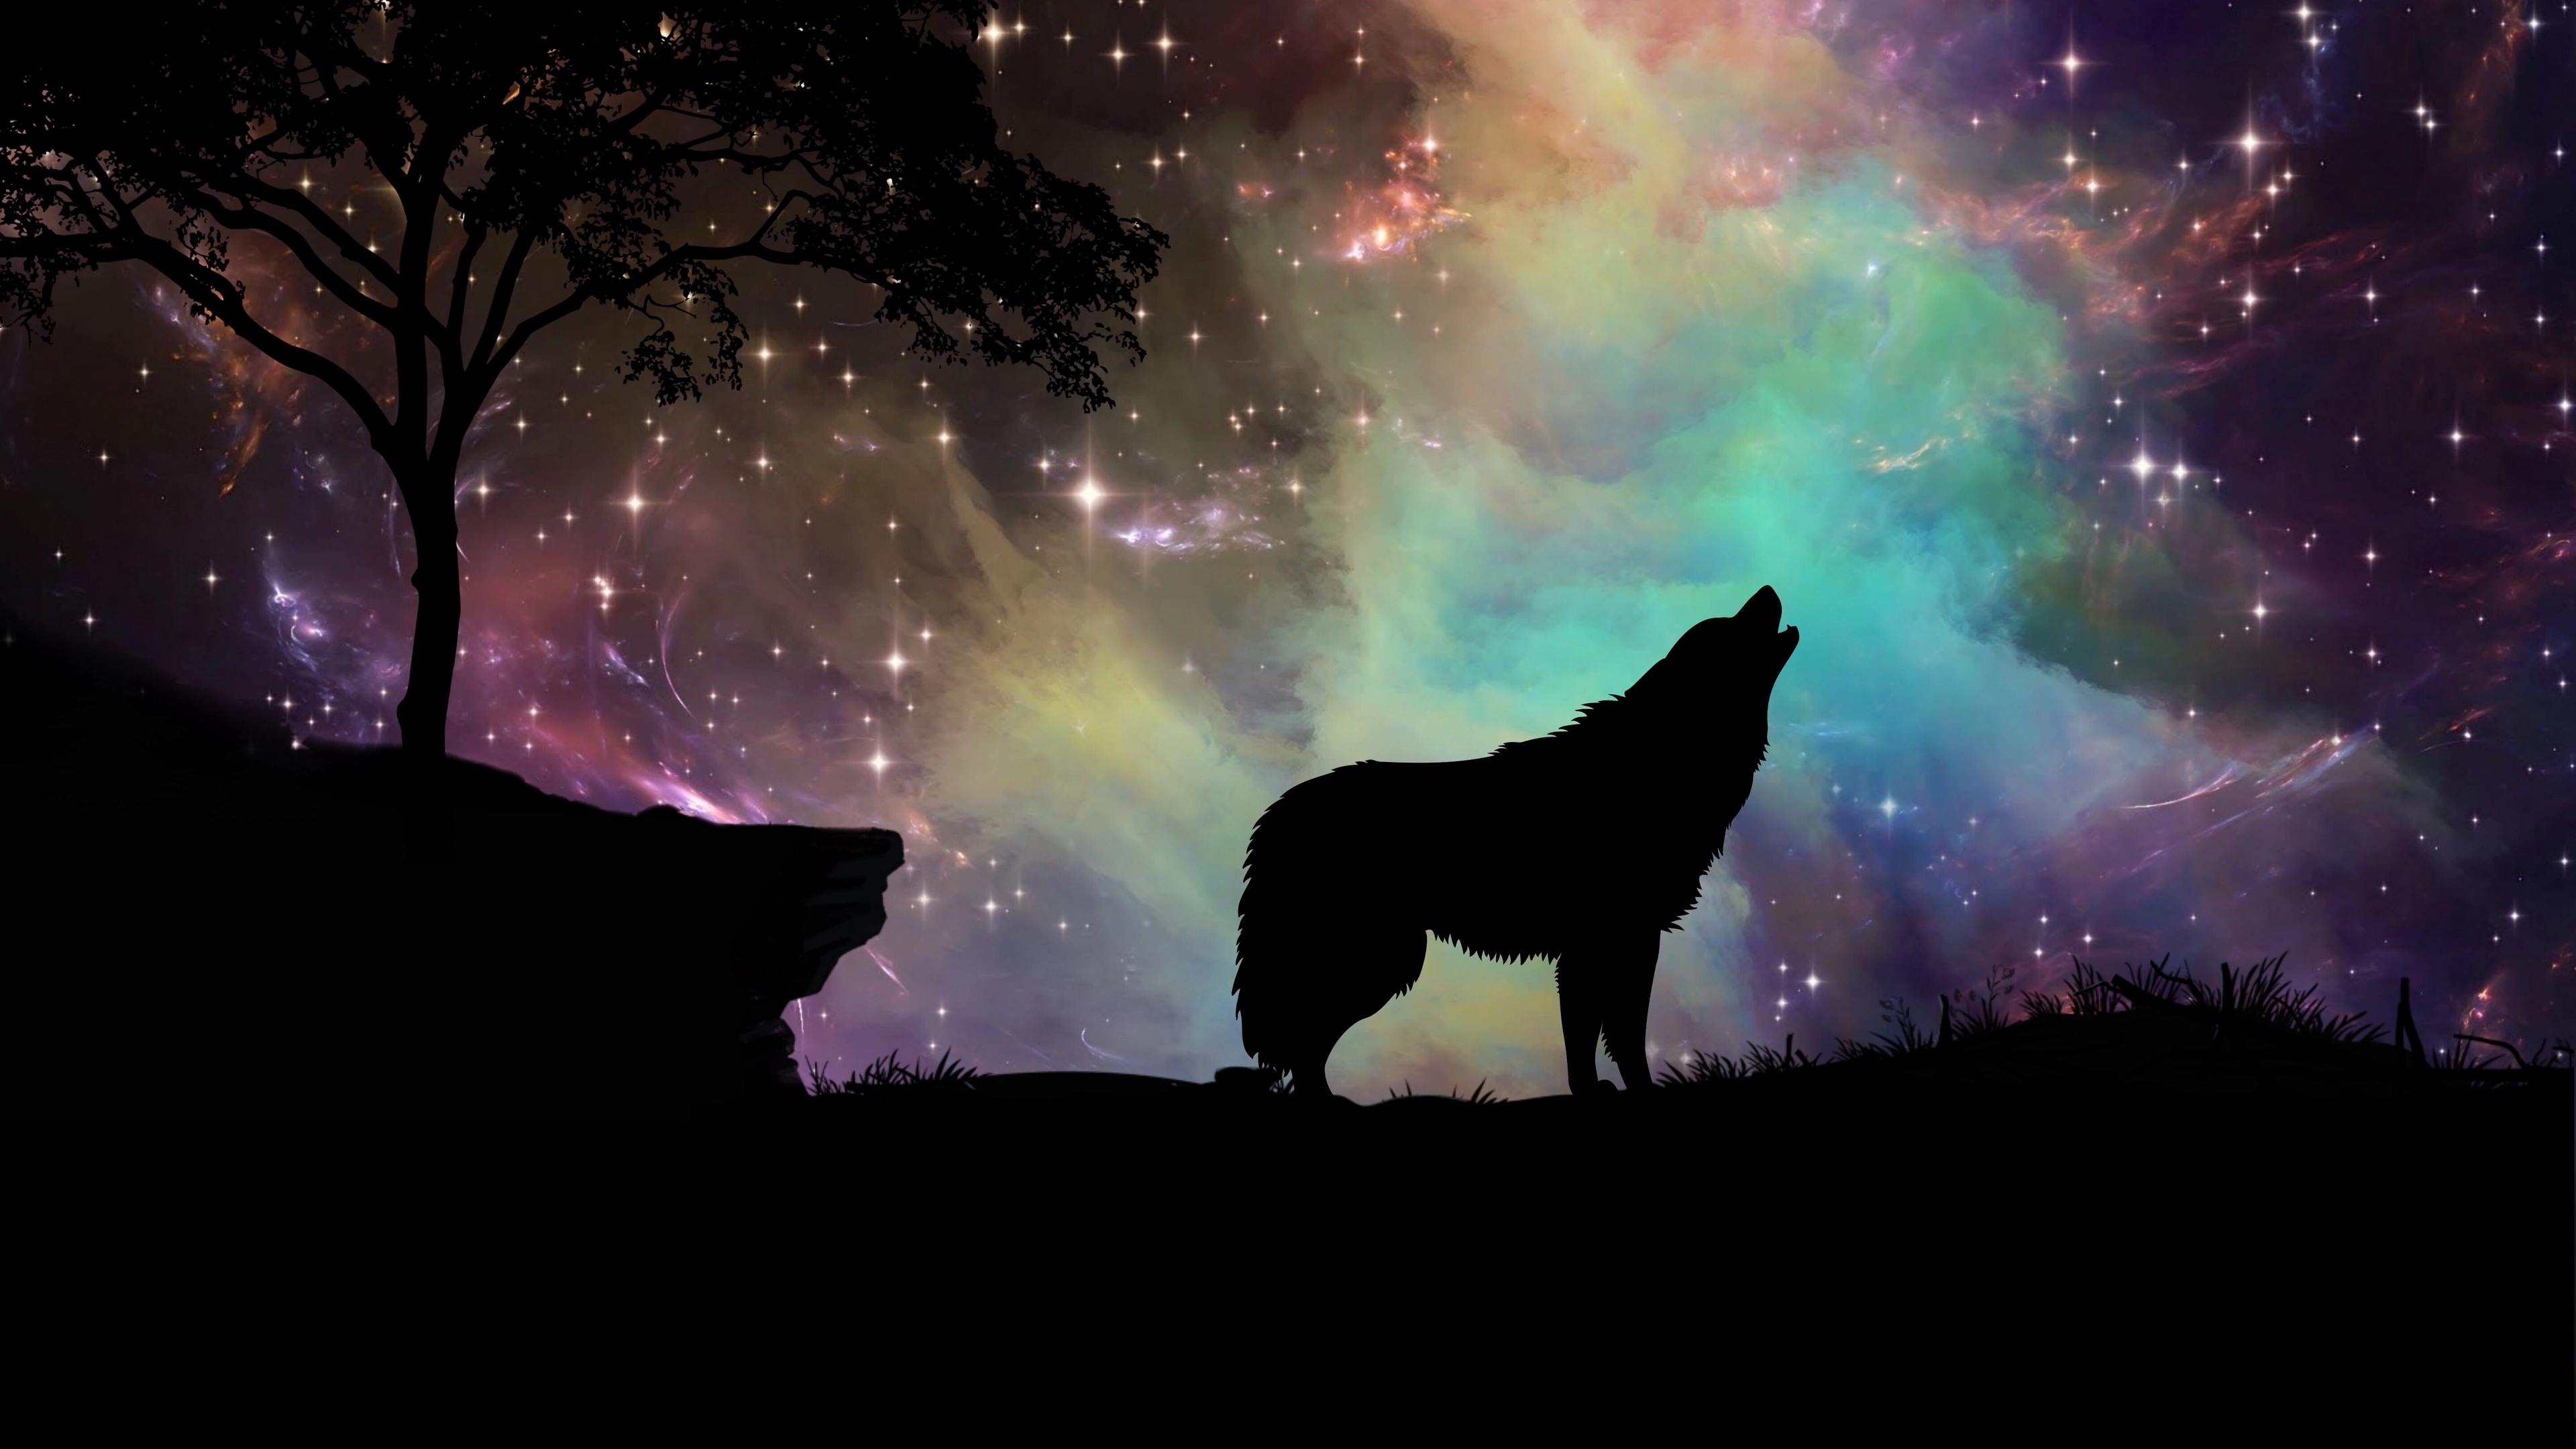 wolf starry sky silhouette art 4k 1542824454 - wolf, starry sky, silhouette, art 4k - Wolf, starry sky, Silhouette